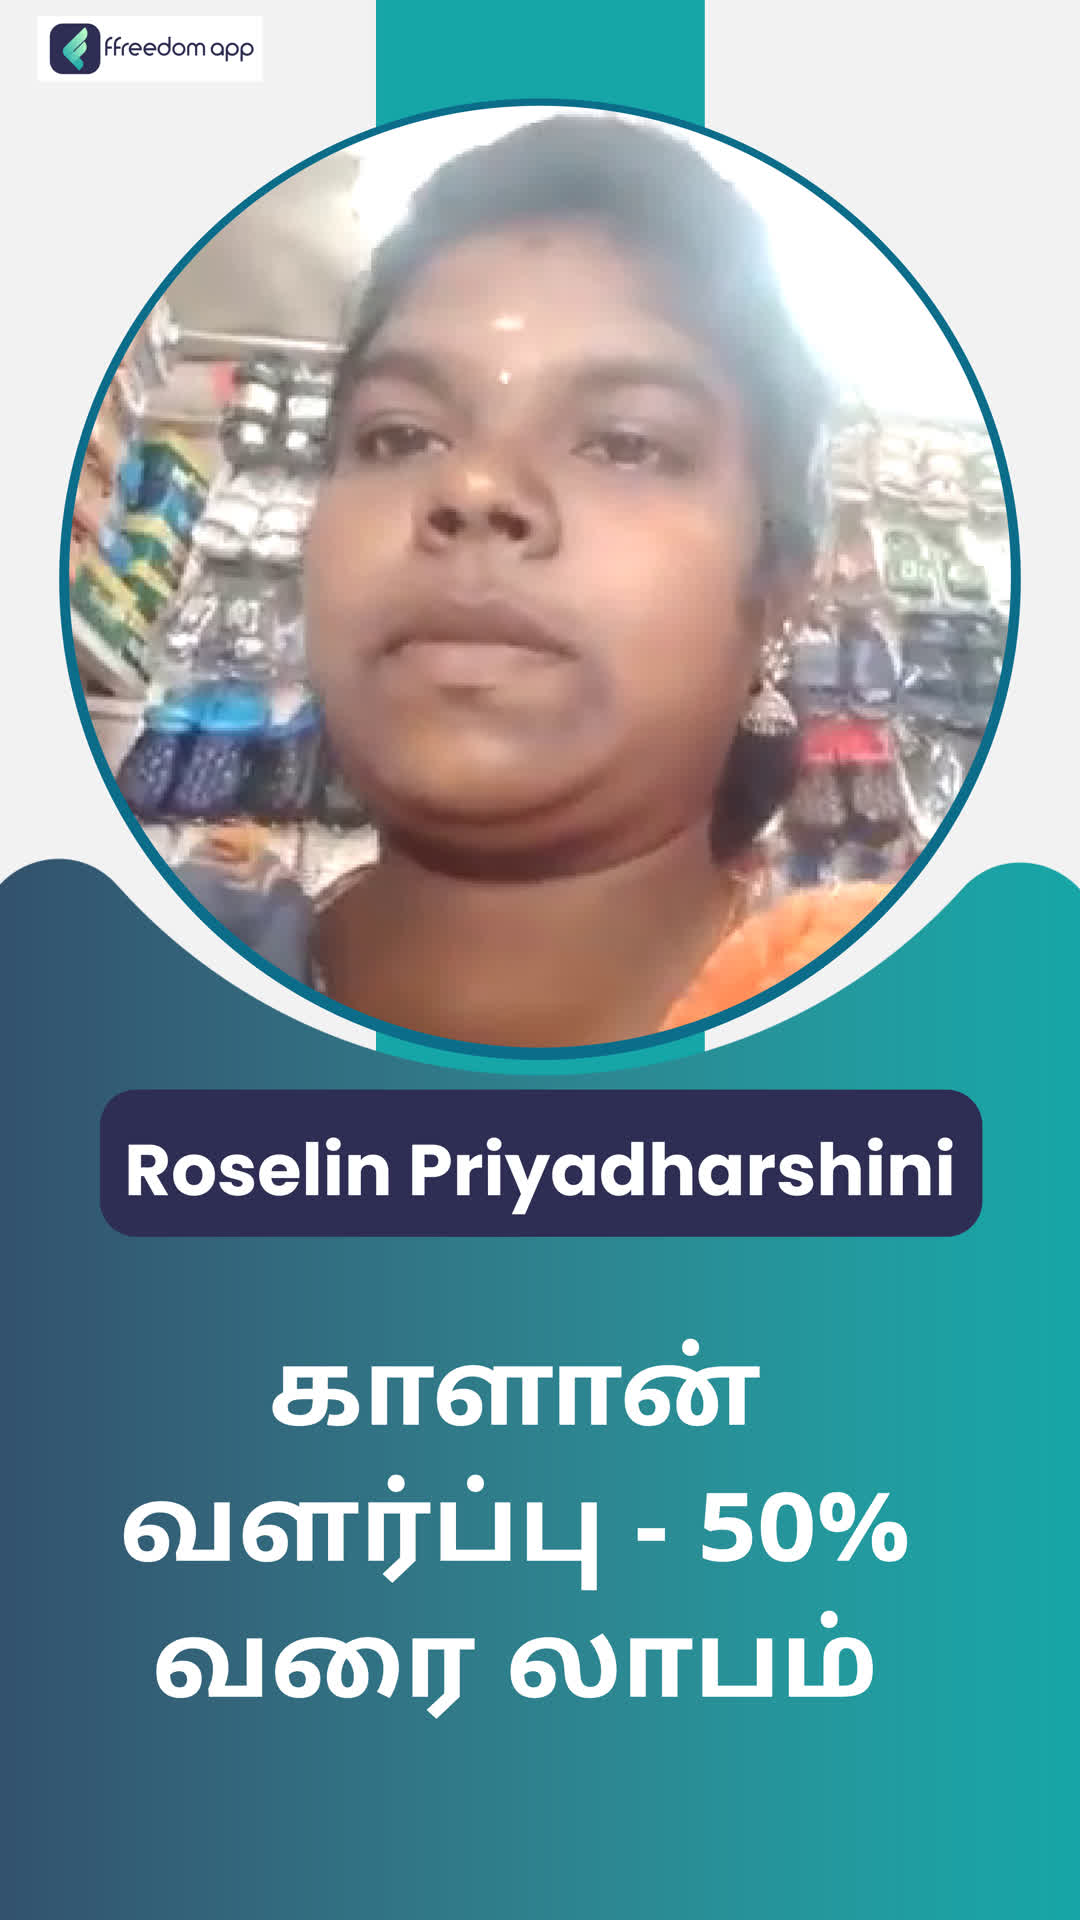 Roselin Priyadharshini's Honest Review of ffreedom app - Dindigul ,Tamil Nadu